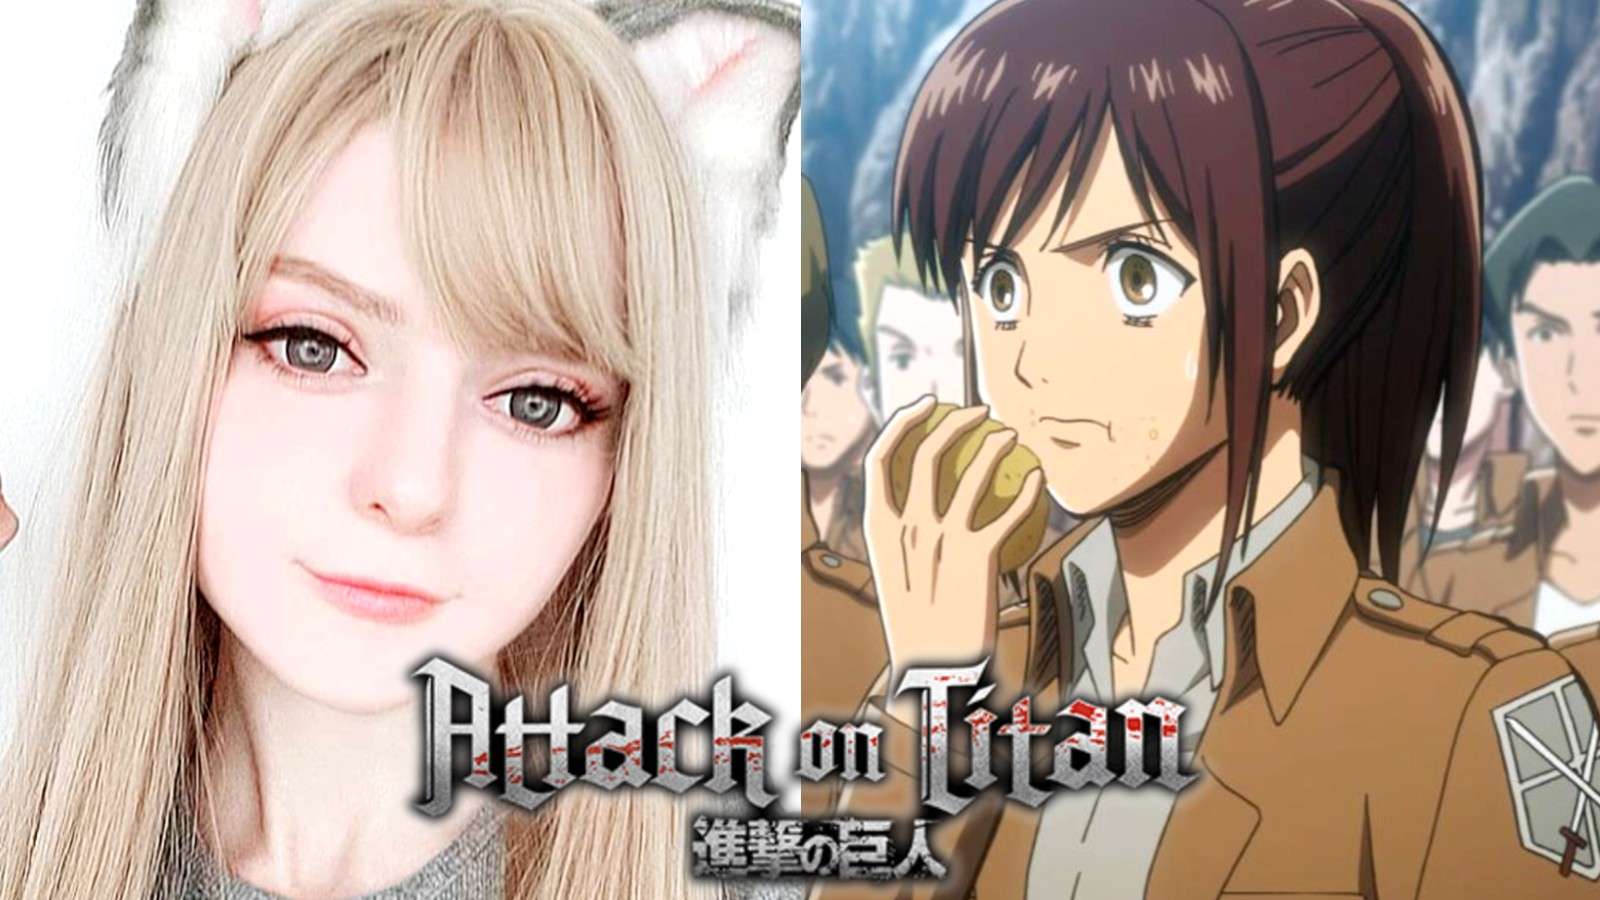 Cosplayer melissa_lissova next to Sasha Braus from the anime Attack on Titan